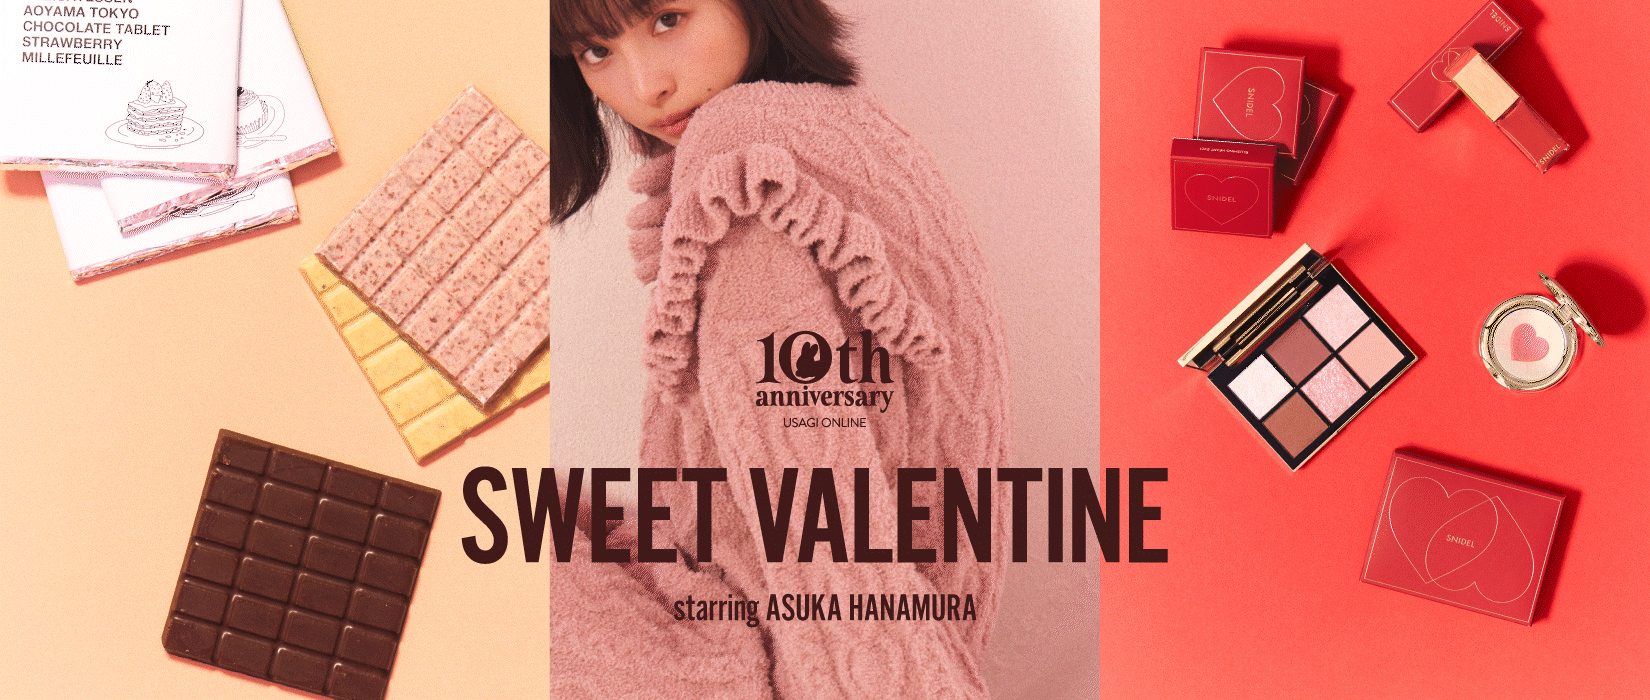 【USAGI ONLINE 10周年-vol.2-】SWEET VALENTINE  starring ASUKA HANAMURA